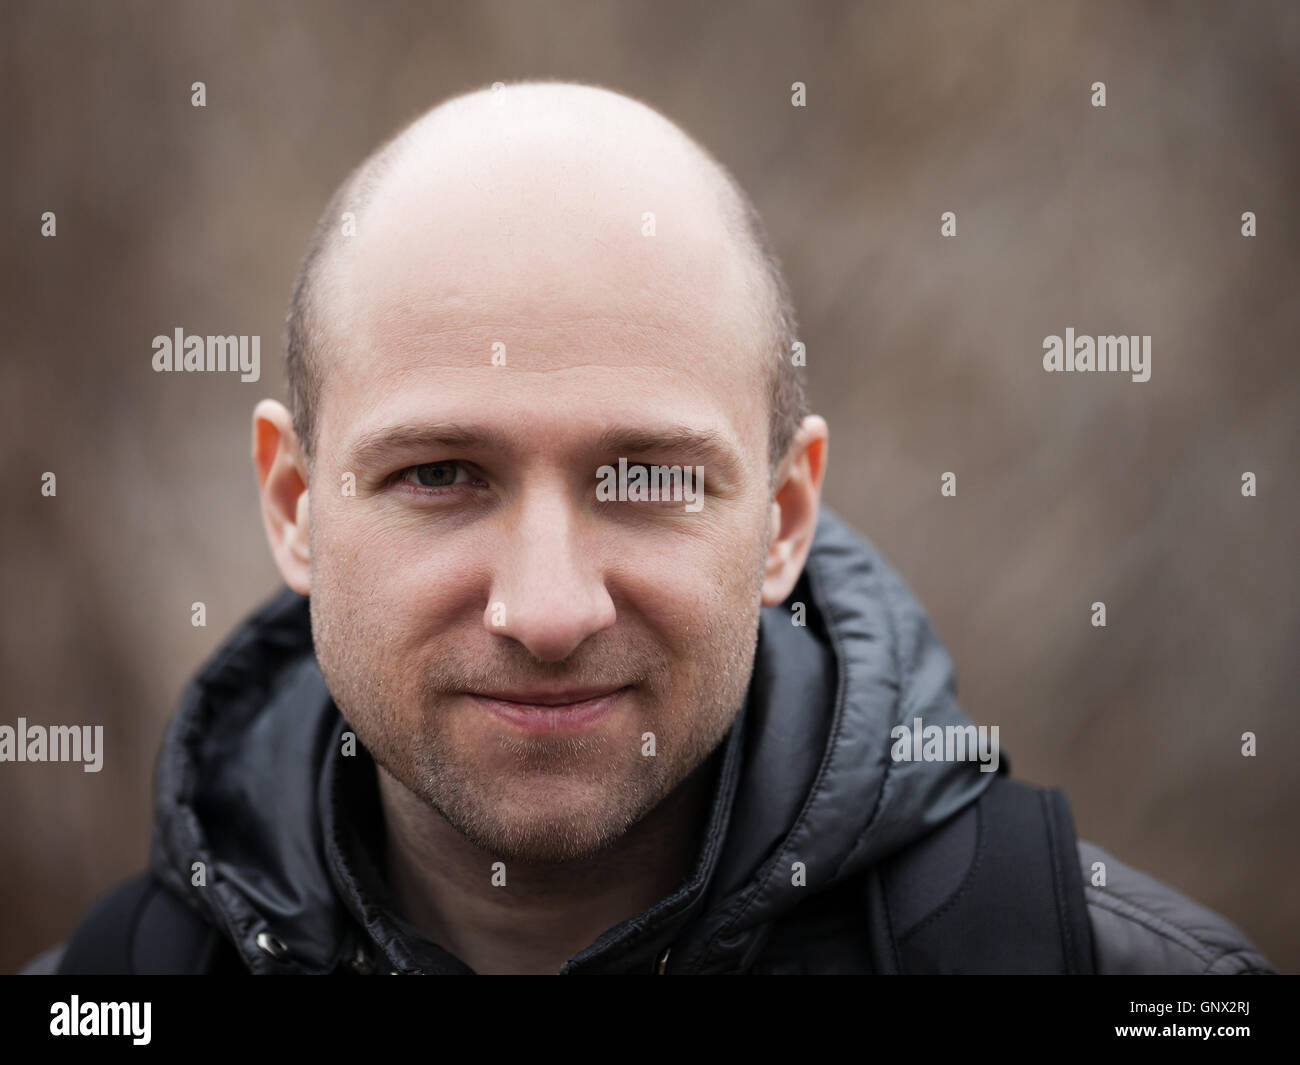 Bald man portrait Stock Photo